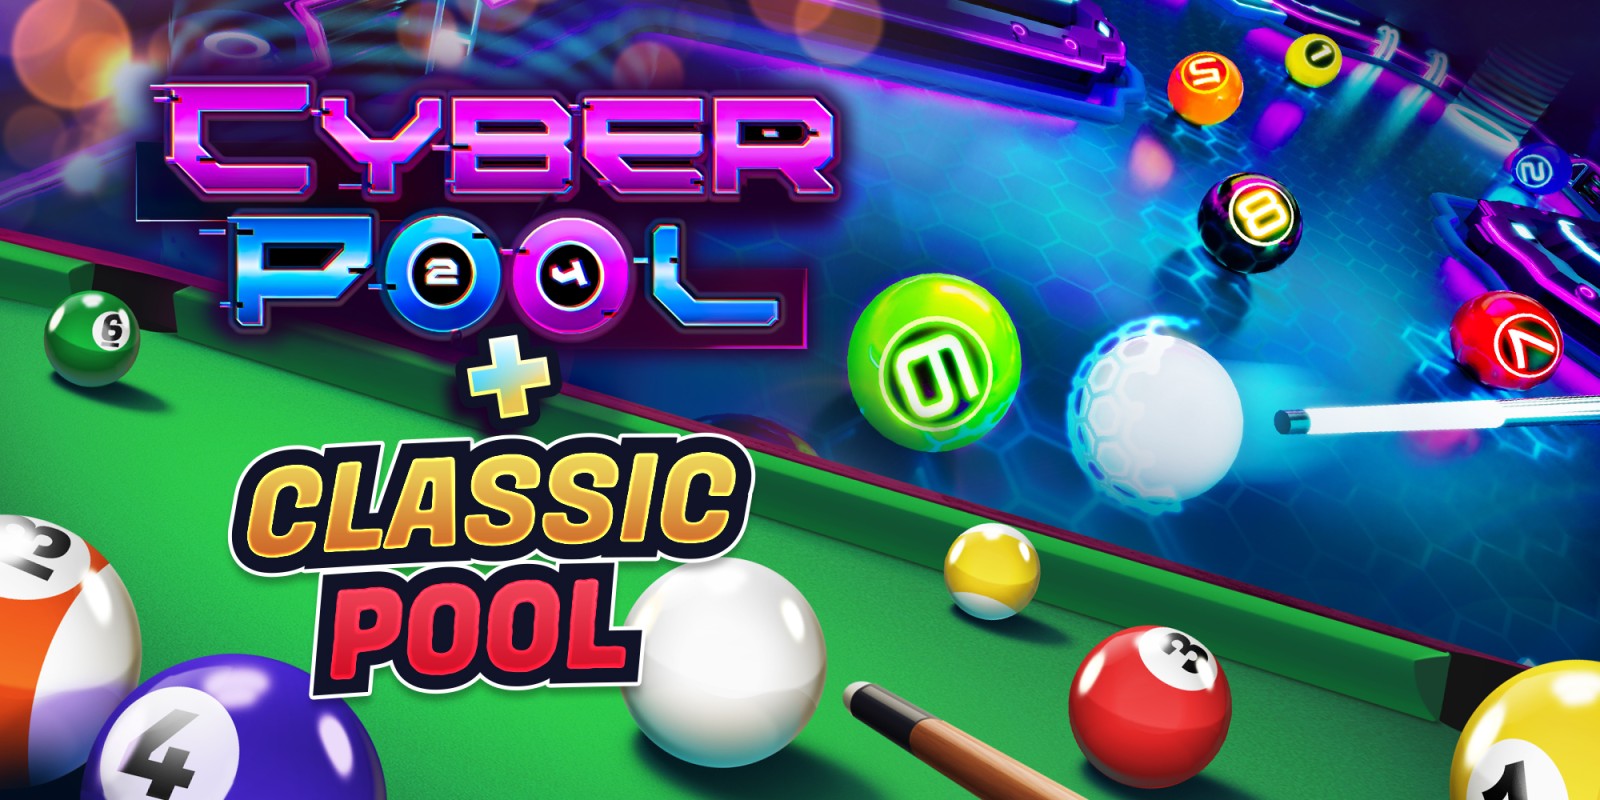 Classic Pool and Cyber Pool Bundle